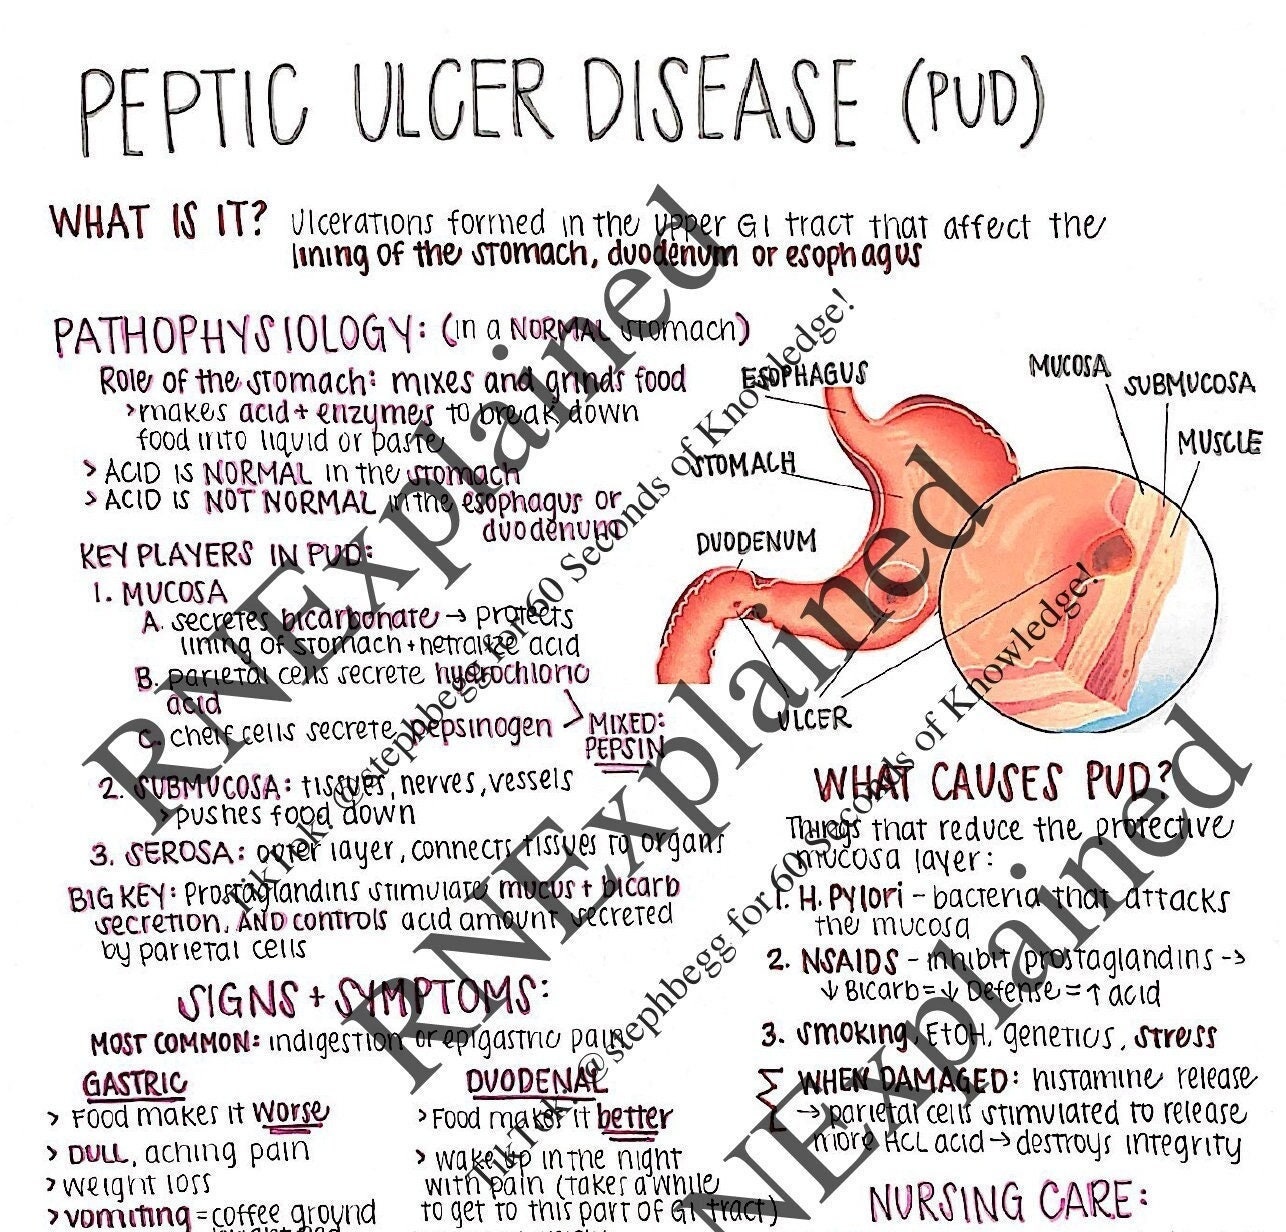 nursing case study on peptic ulcer